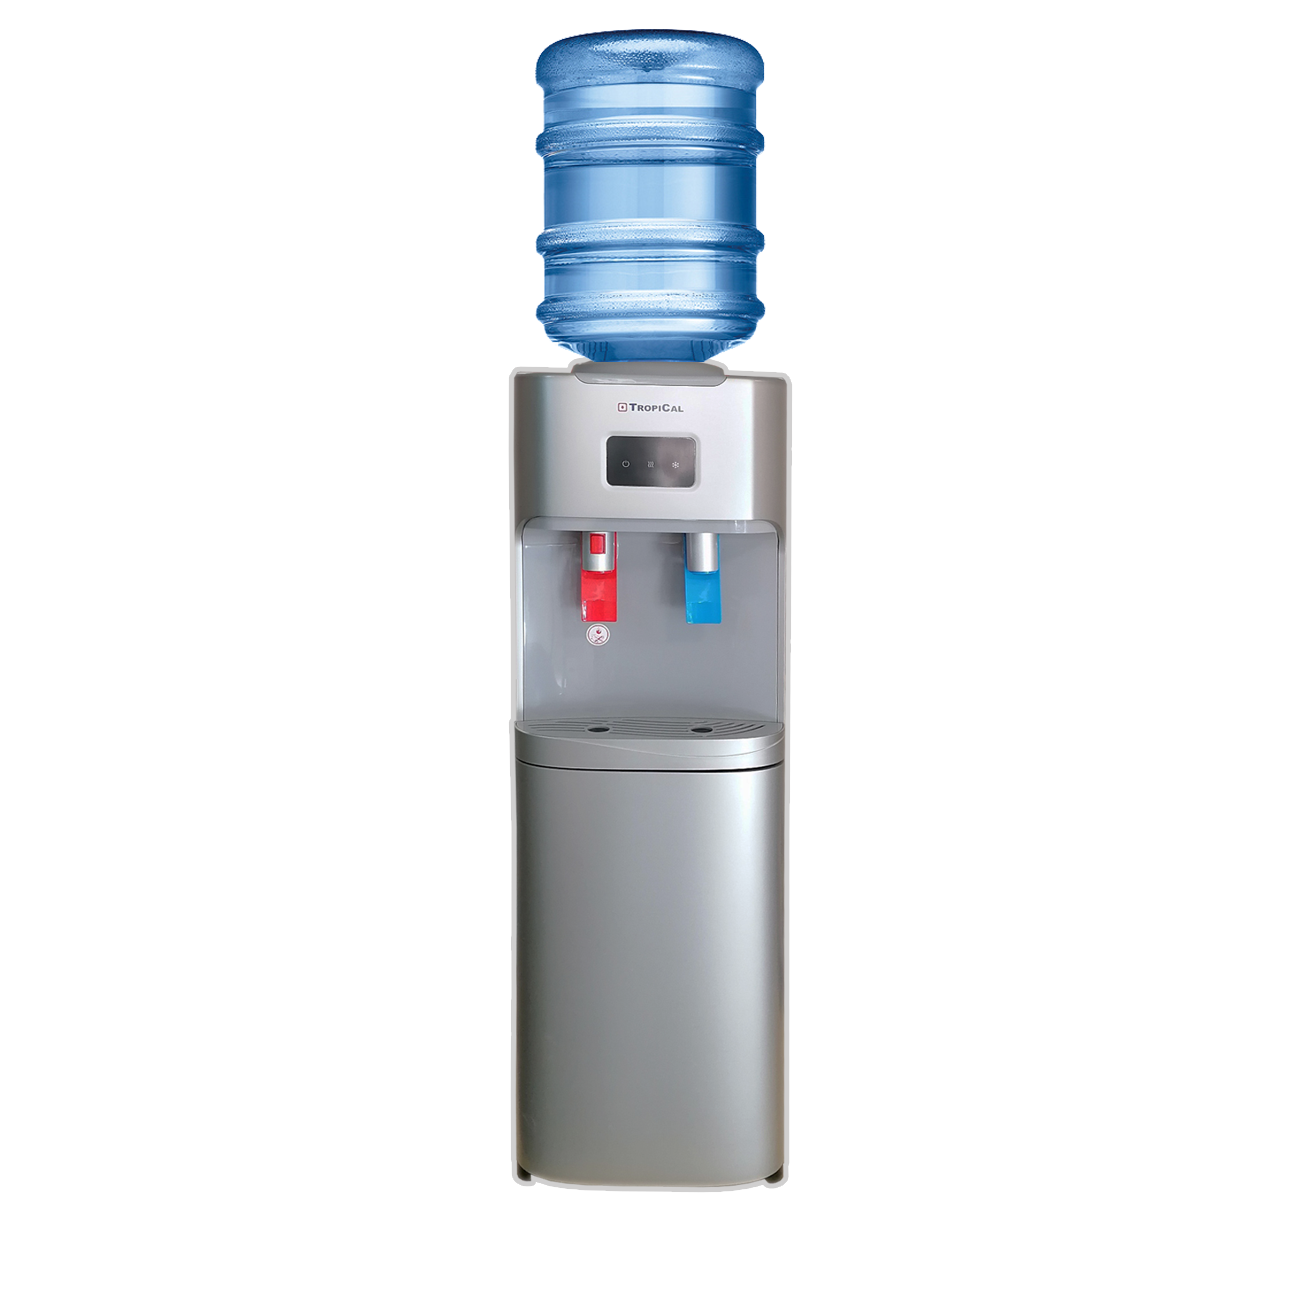 TROPICAL water dispenser